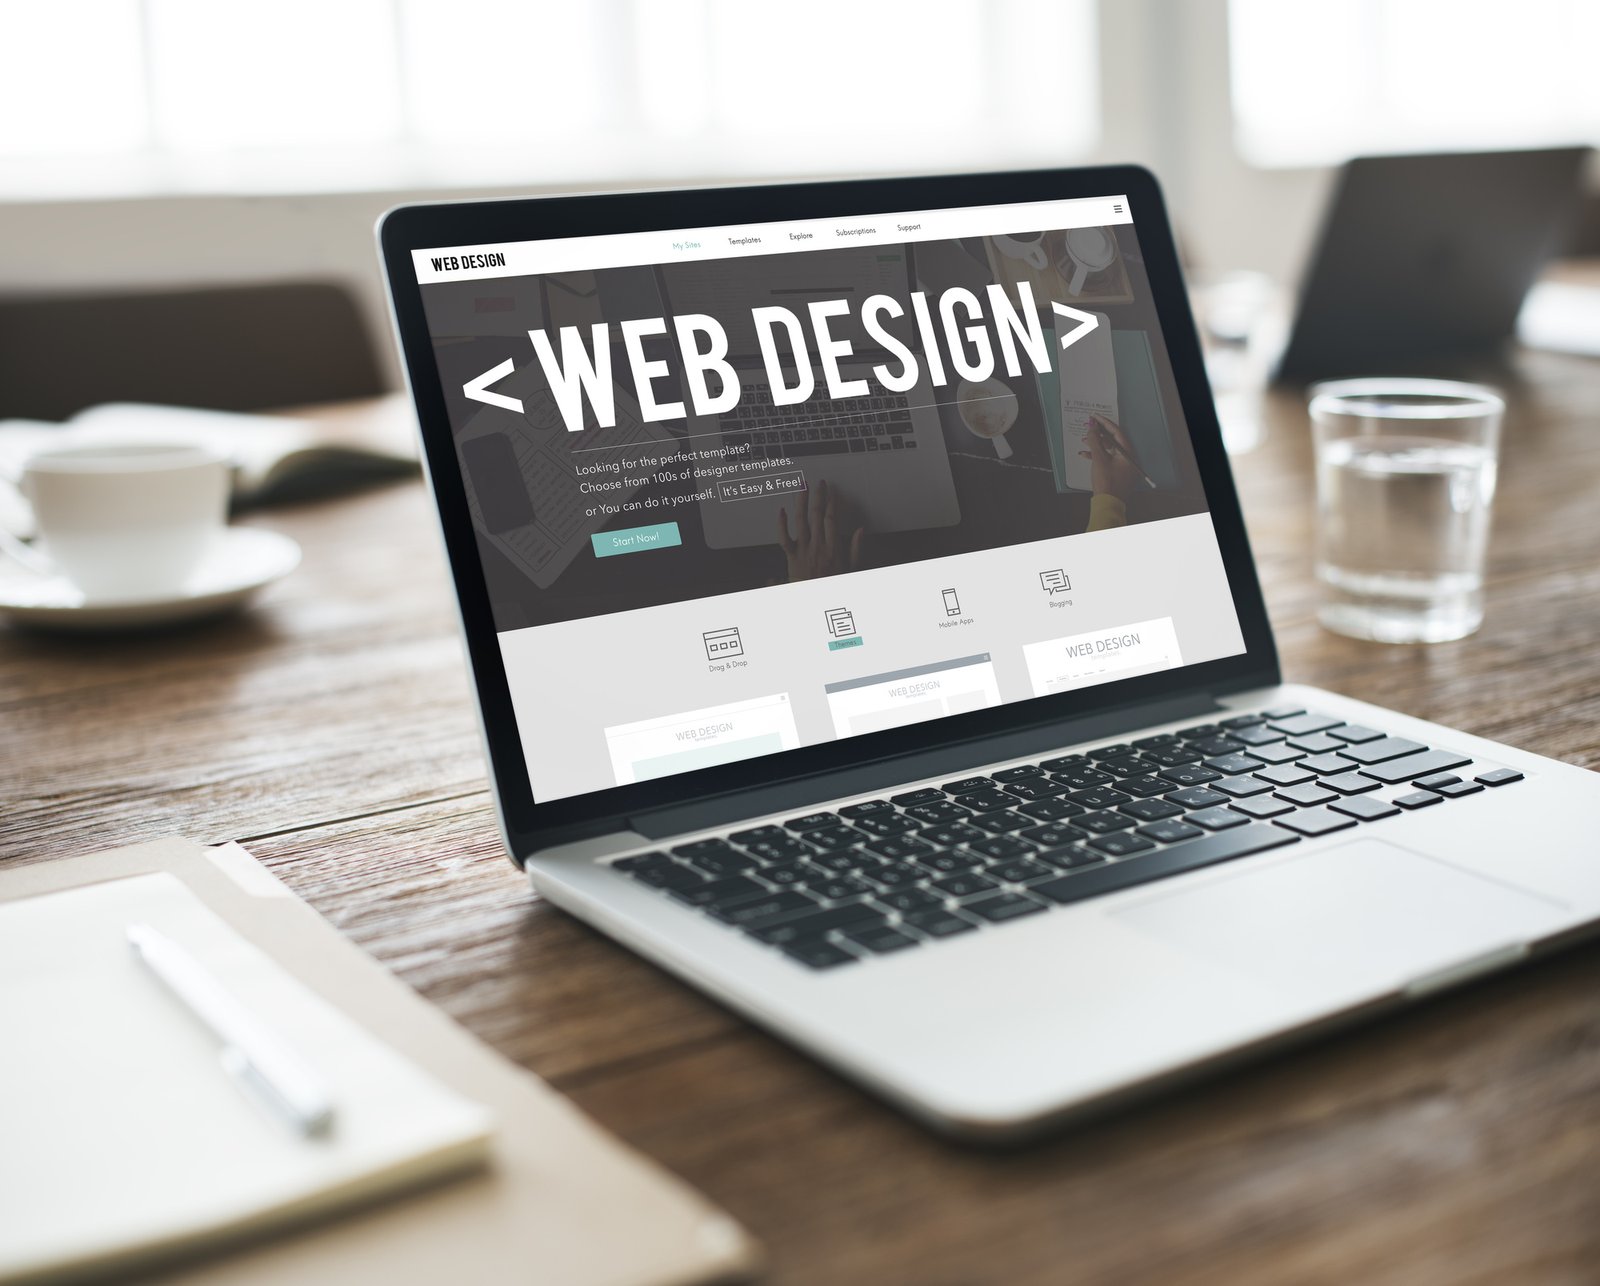 Web Design Agency Unveiled: Gateway To Stunning Websites